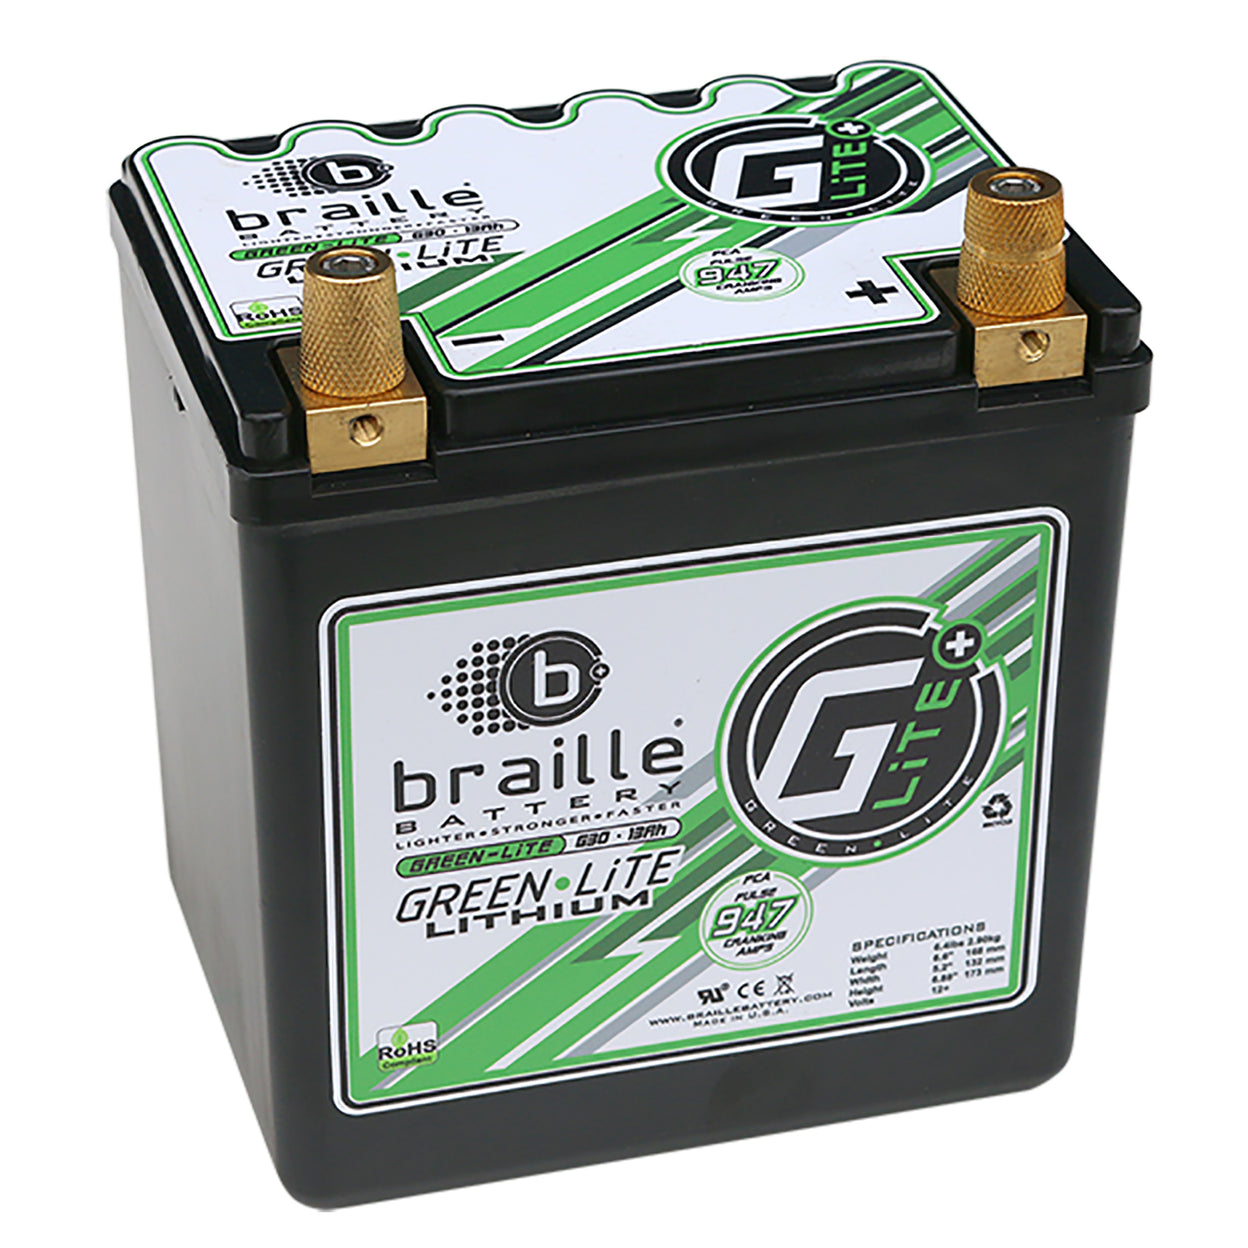 Braille Battery - Green Lite G30 5.5 lb Lithium Battery